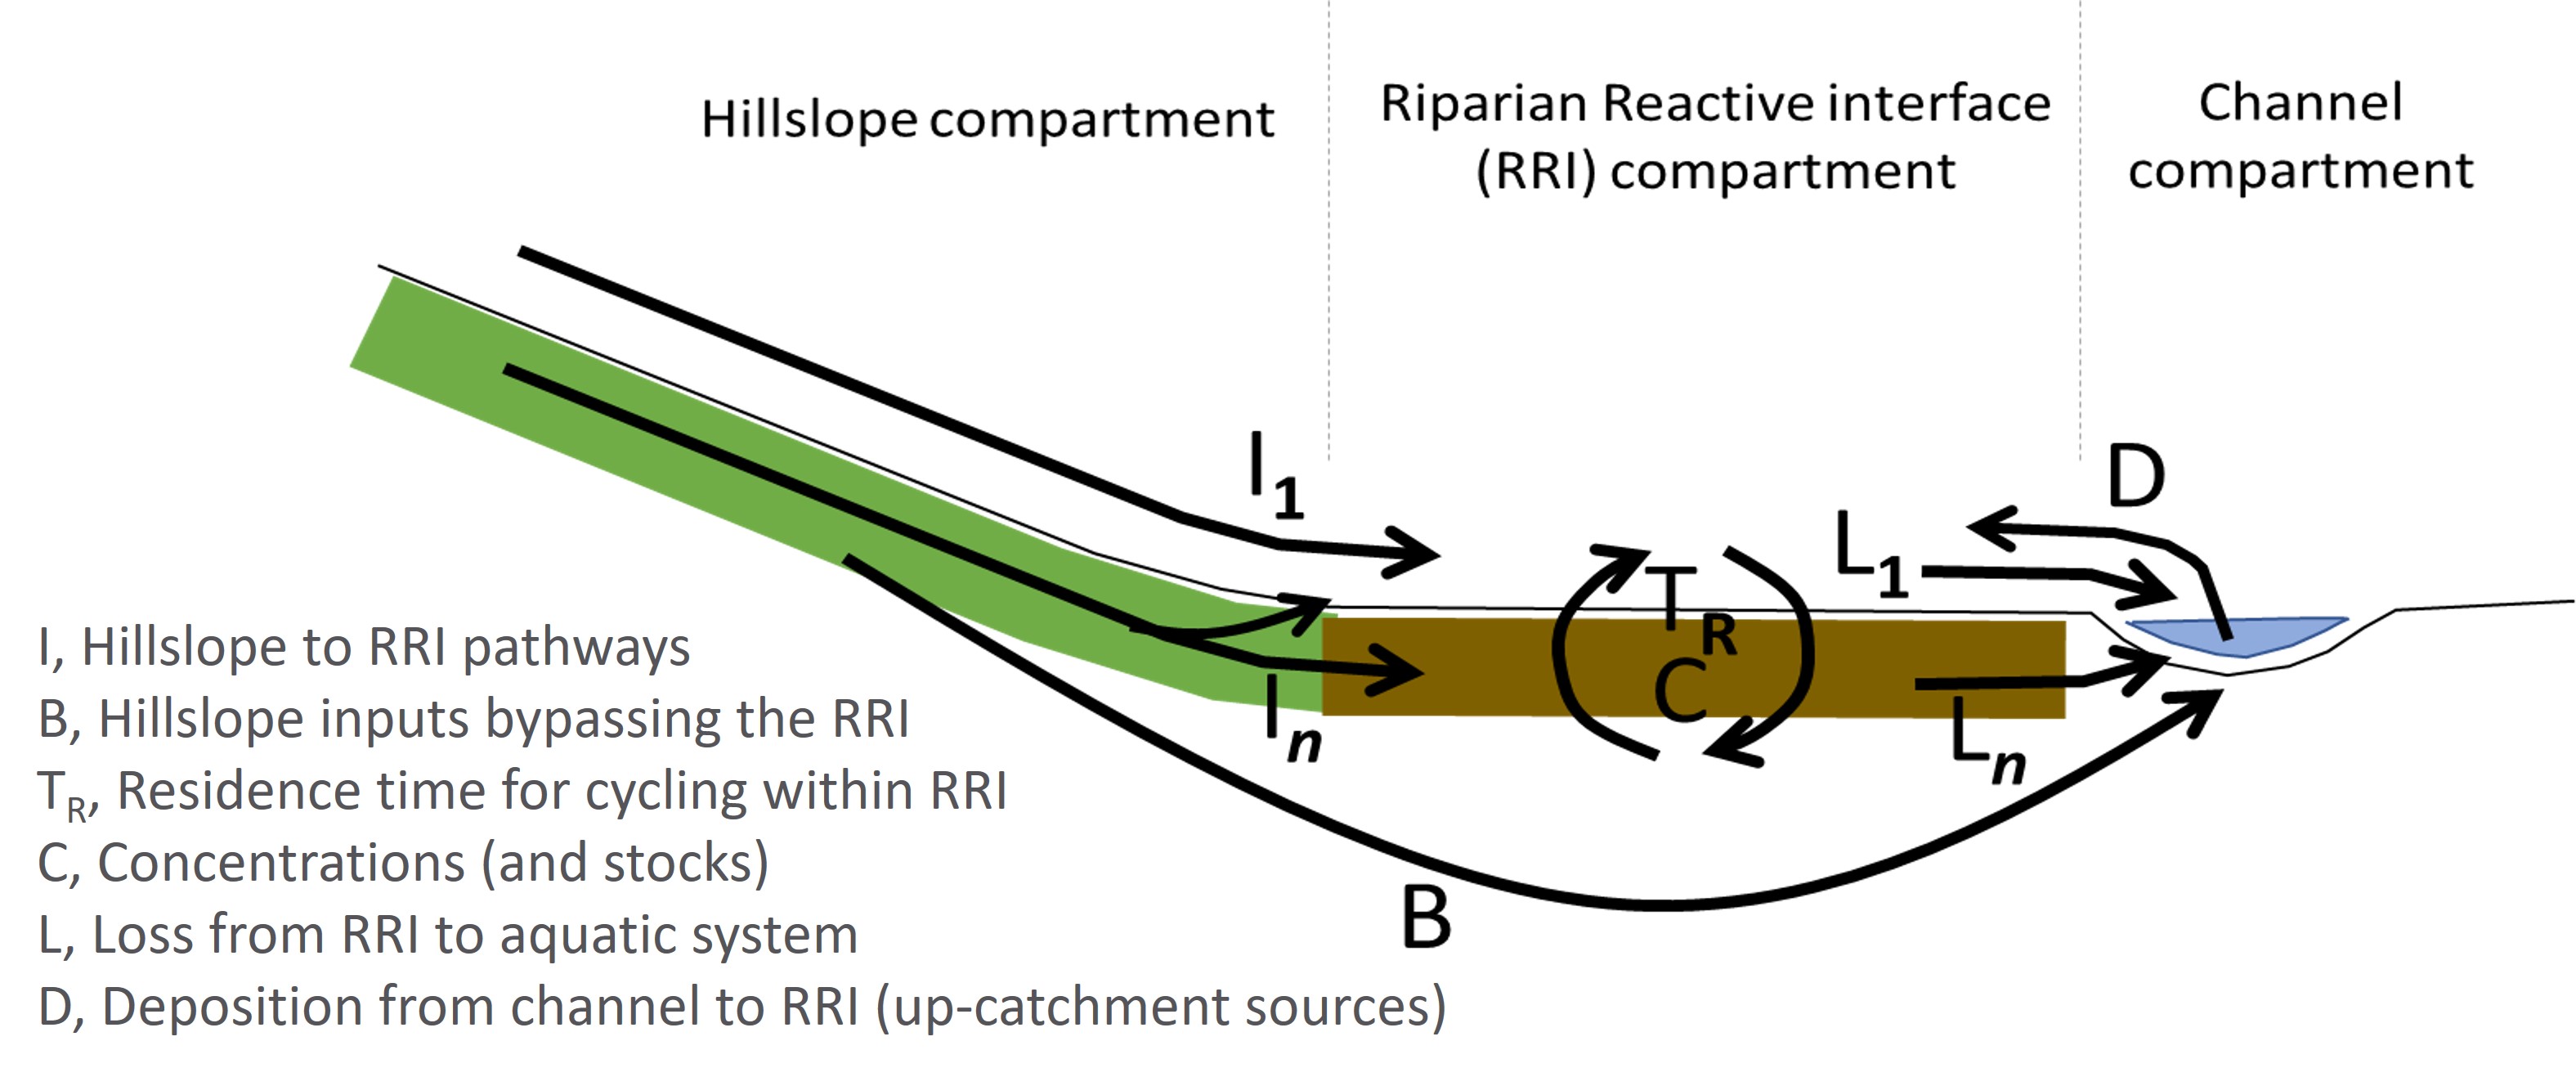 Riparian Reactive Interface processes